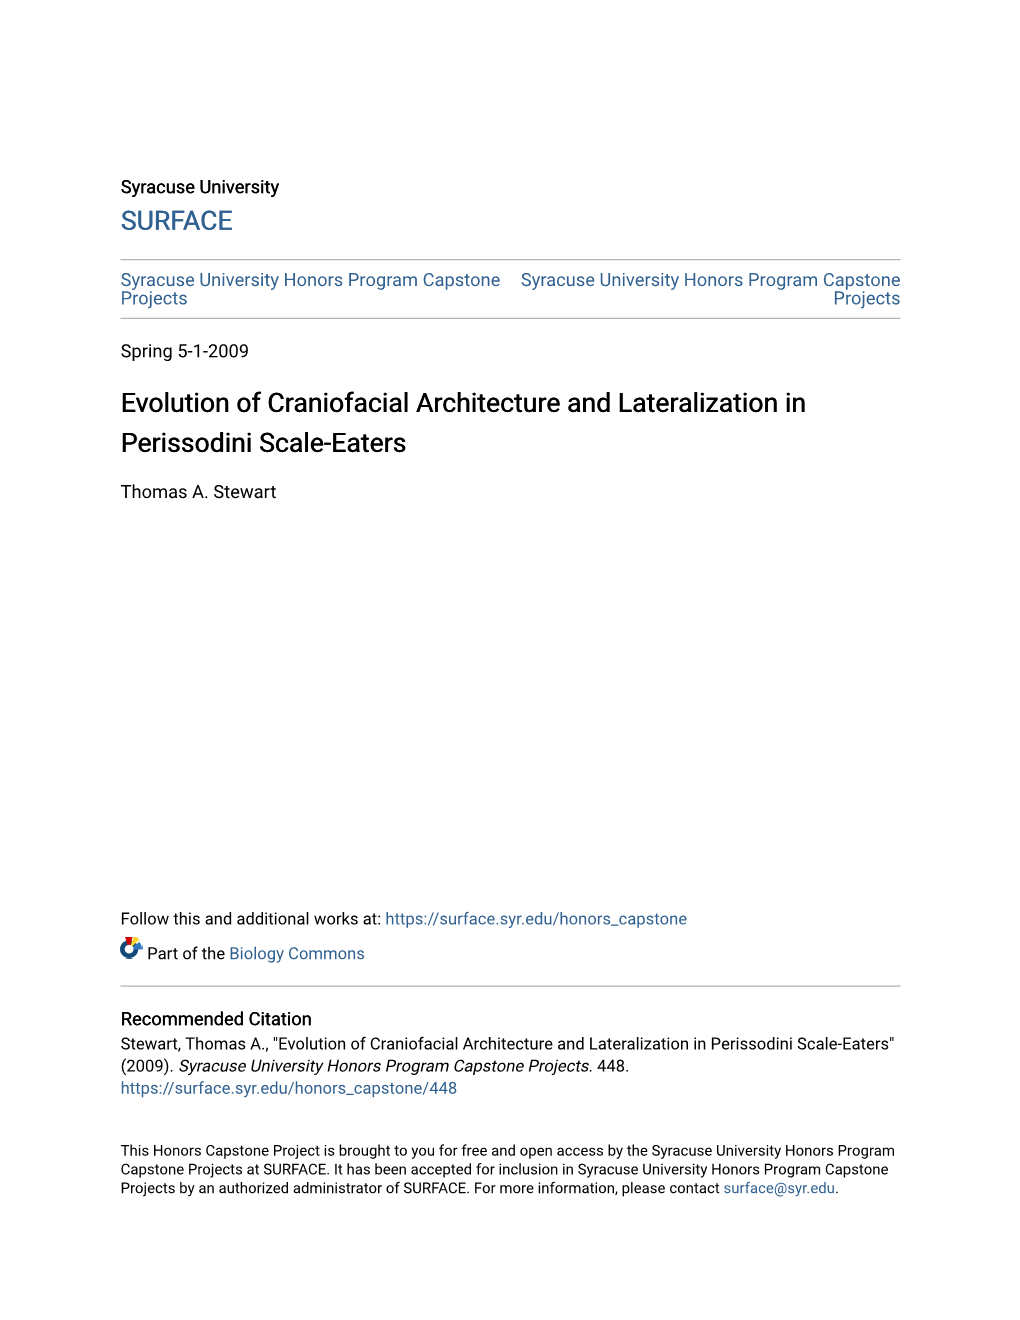 Evolution of Craniofacial Architecture and Lateralization in Perissodini Scale-Eaters